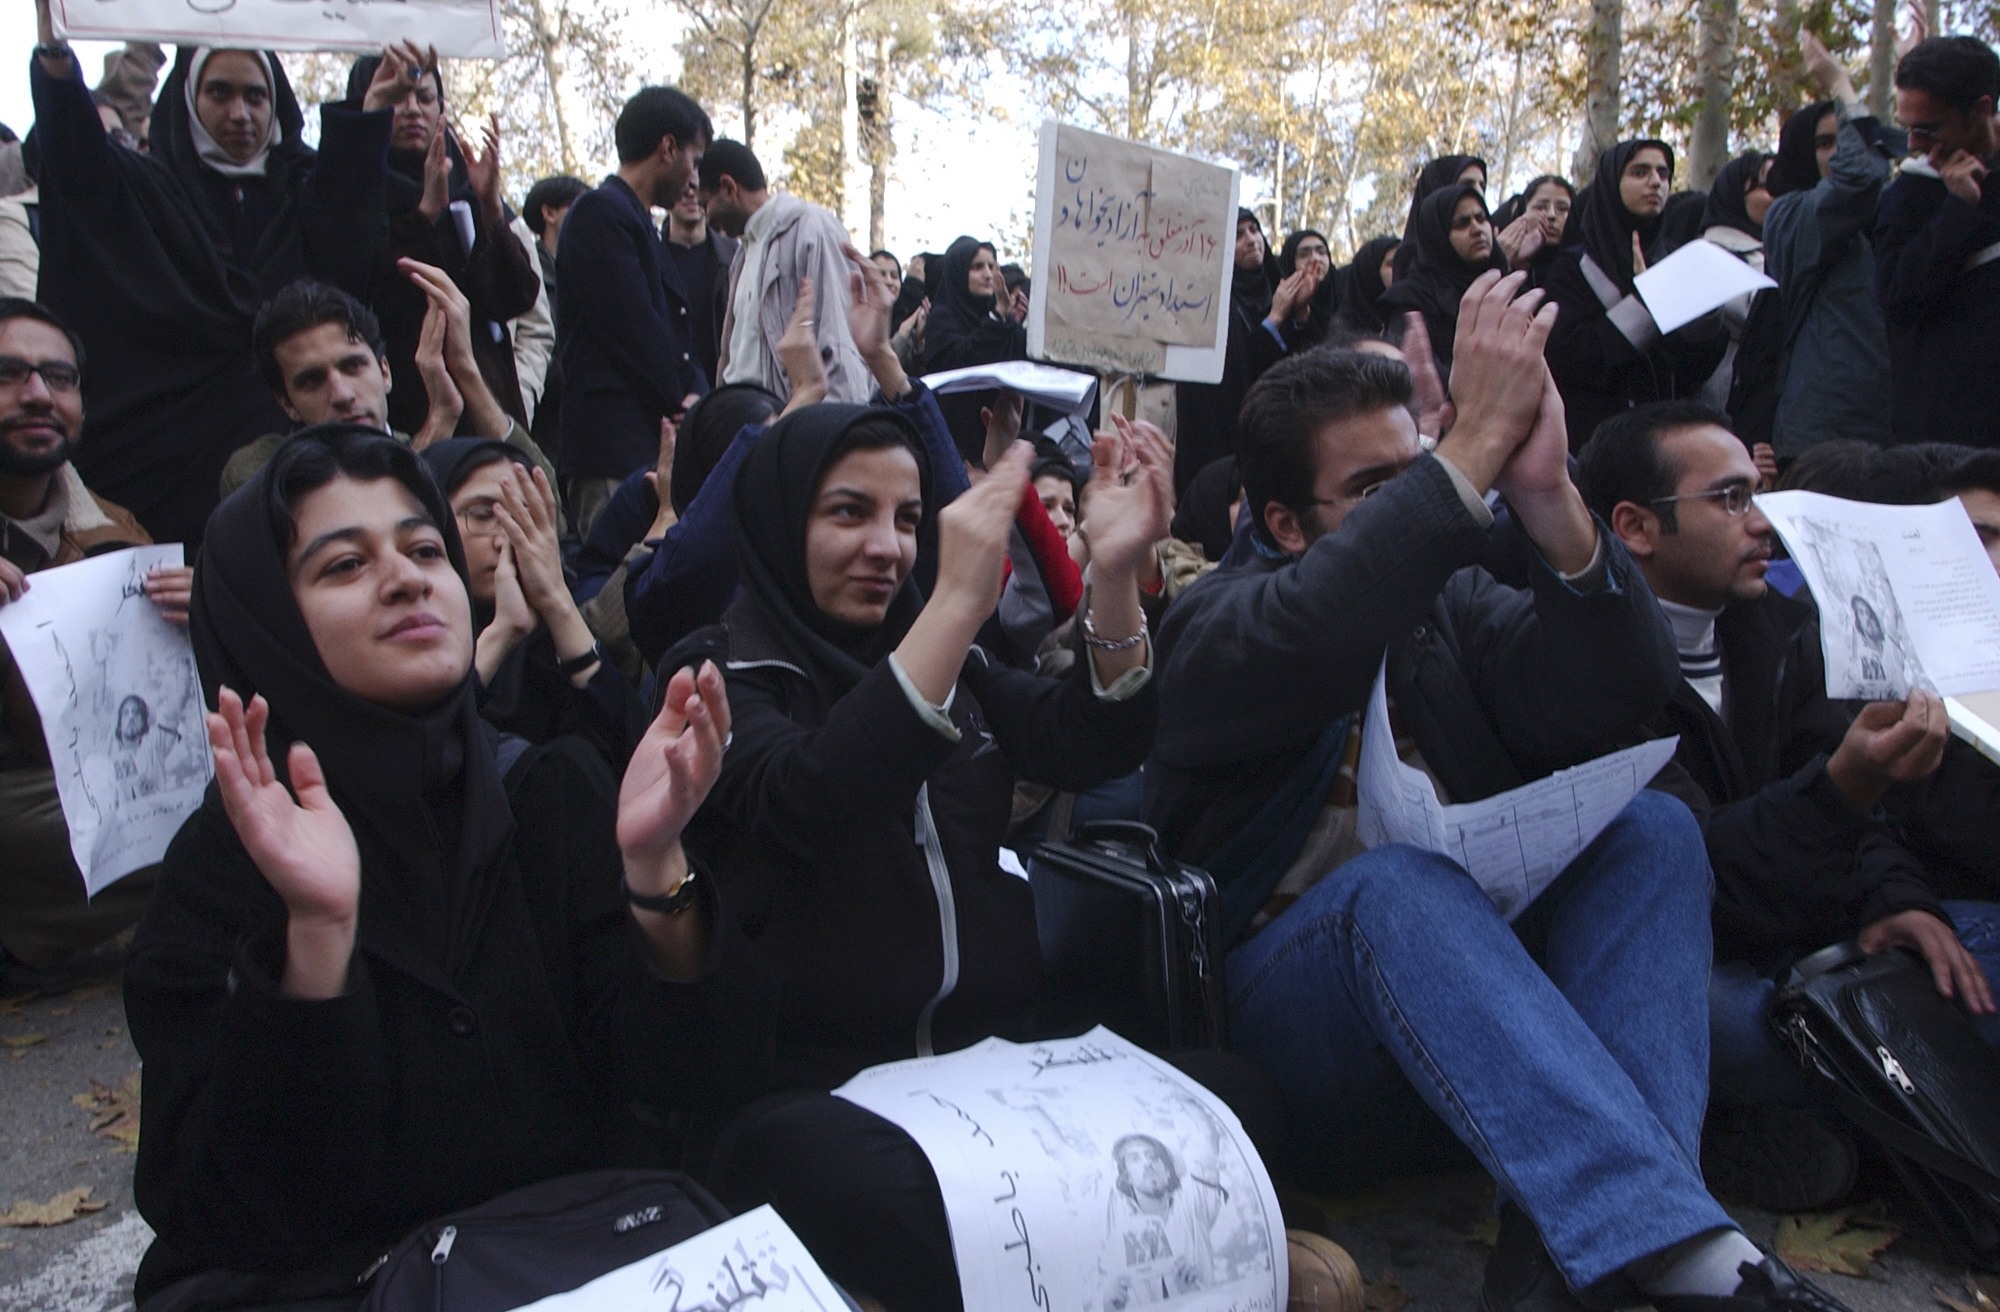 Iran: Overcoming persecution to graduate